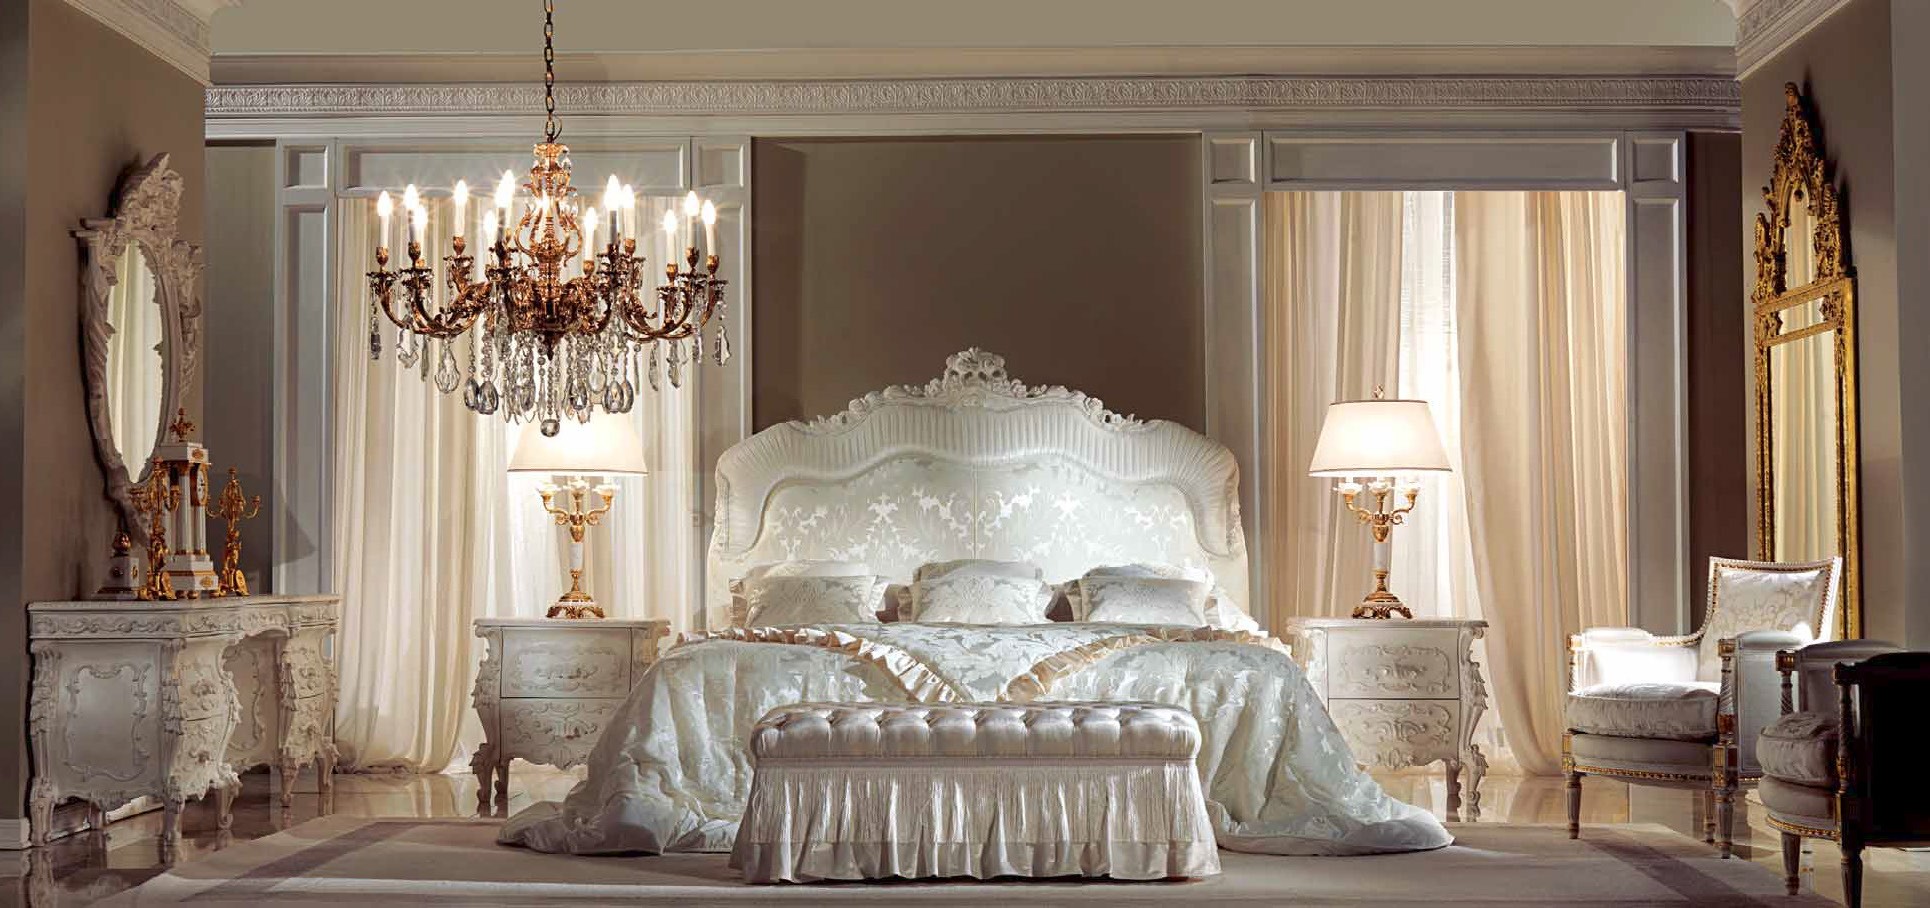 elegant white bedroom furniture